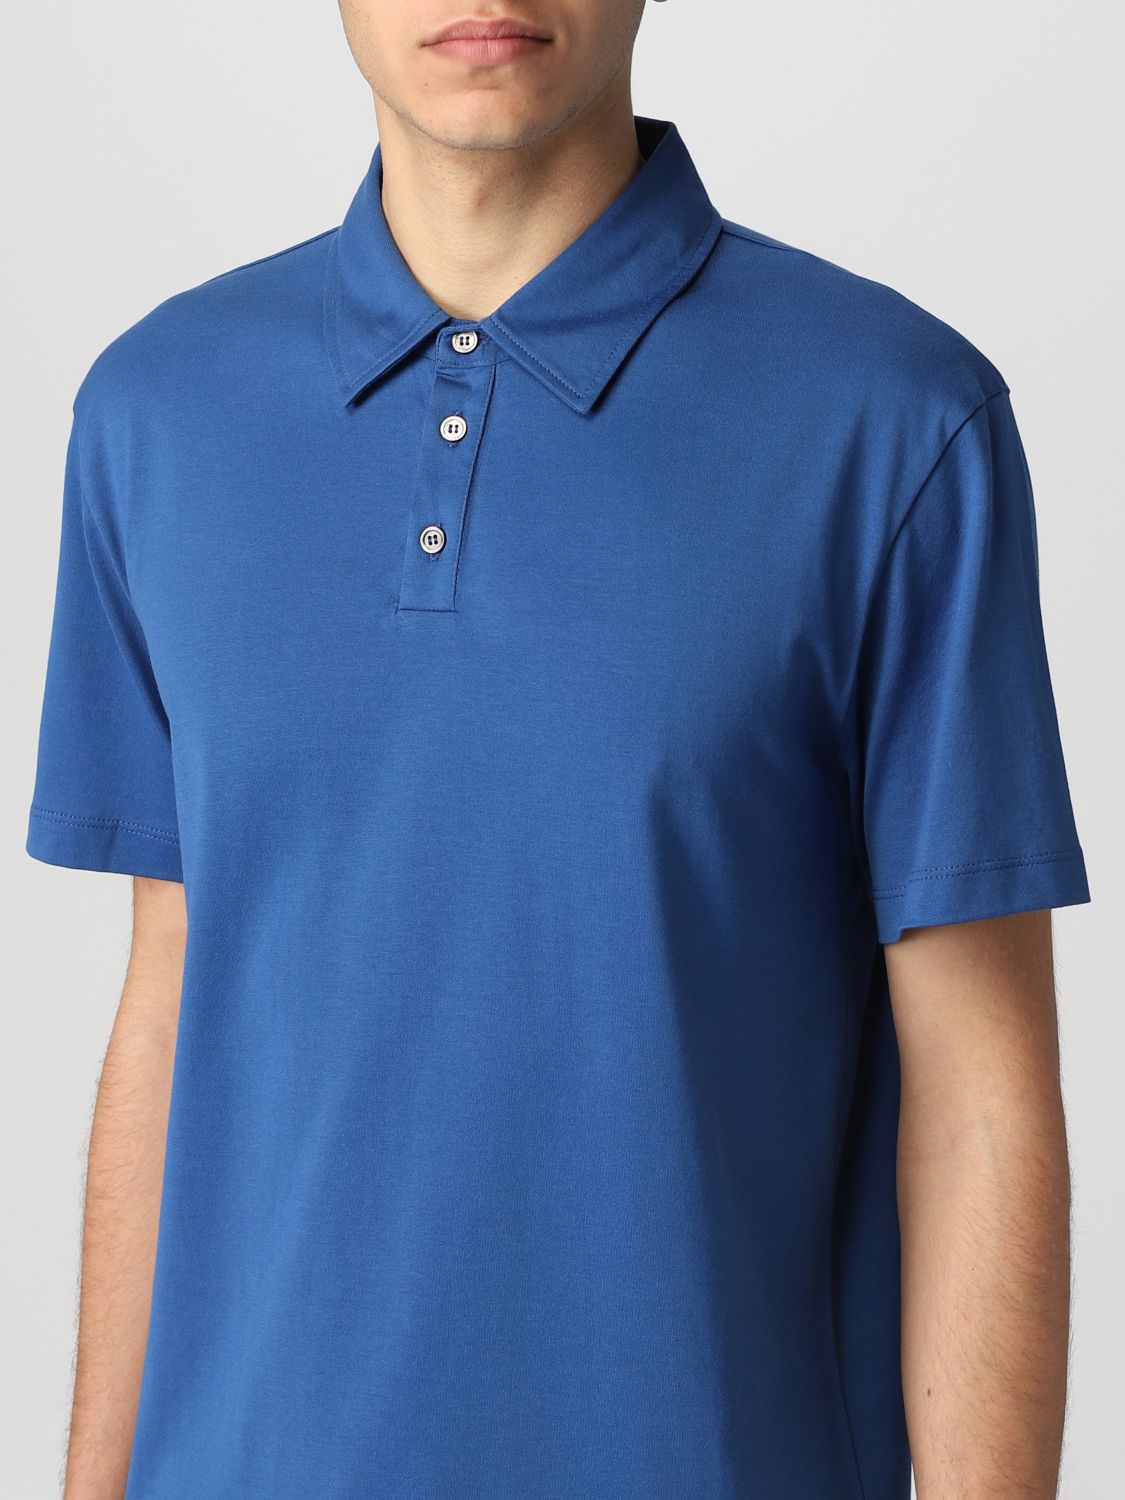 Polo shirt Roberto Collina: Roberto Collina polo shirt for man blue 3